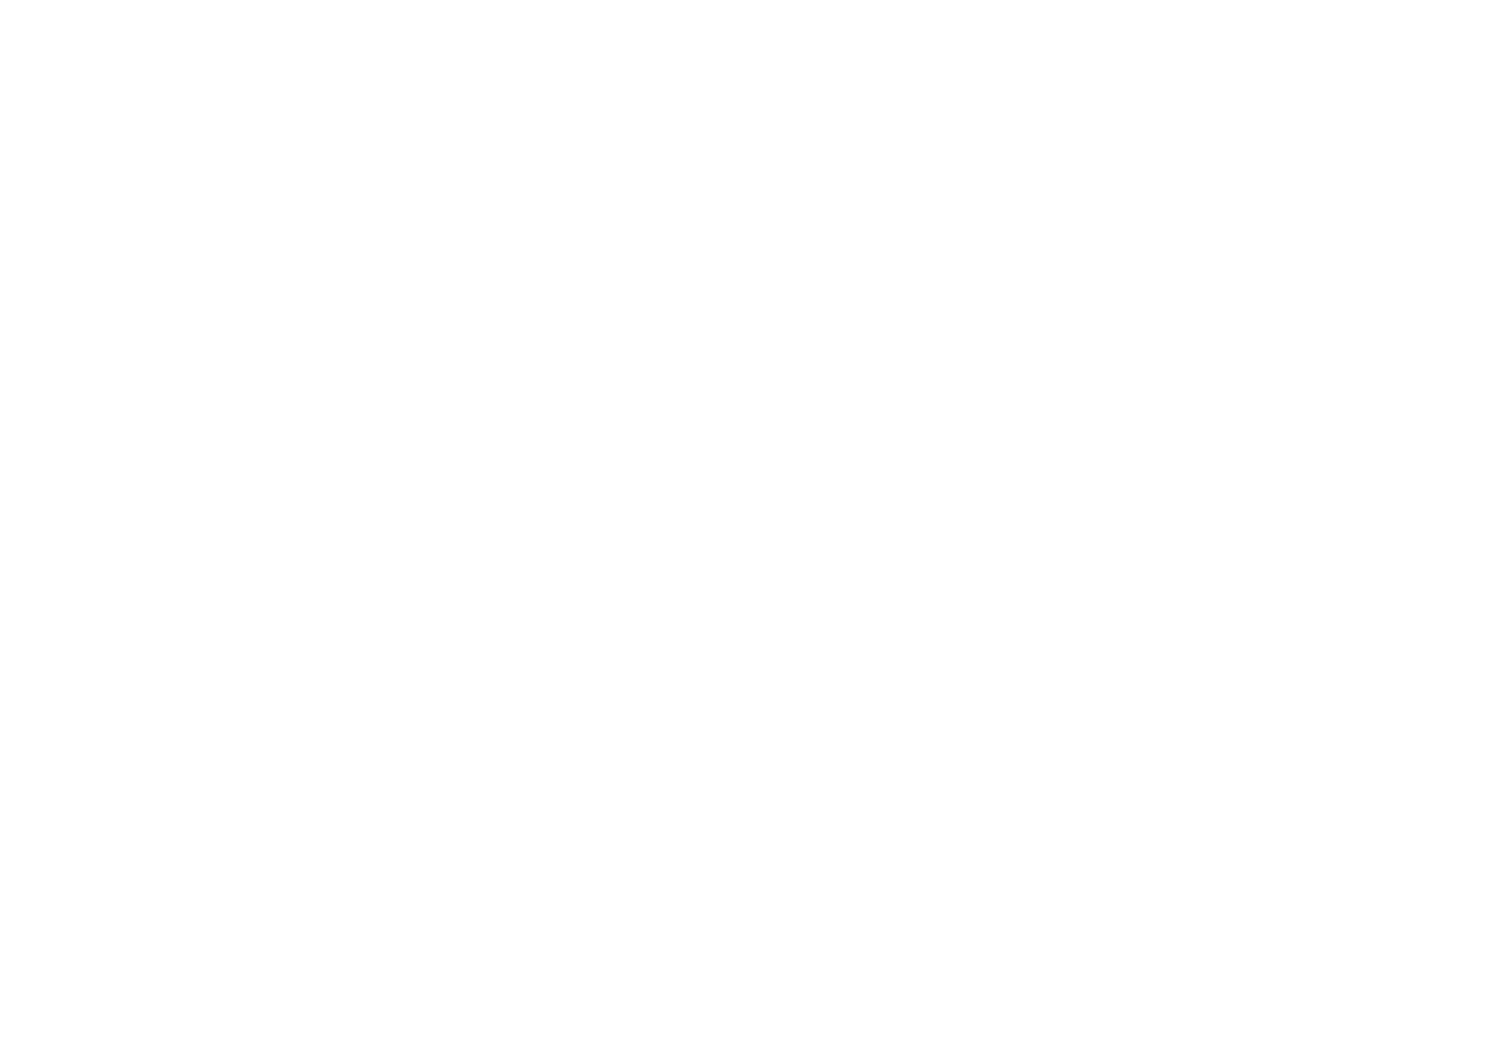 Record Room LIC